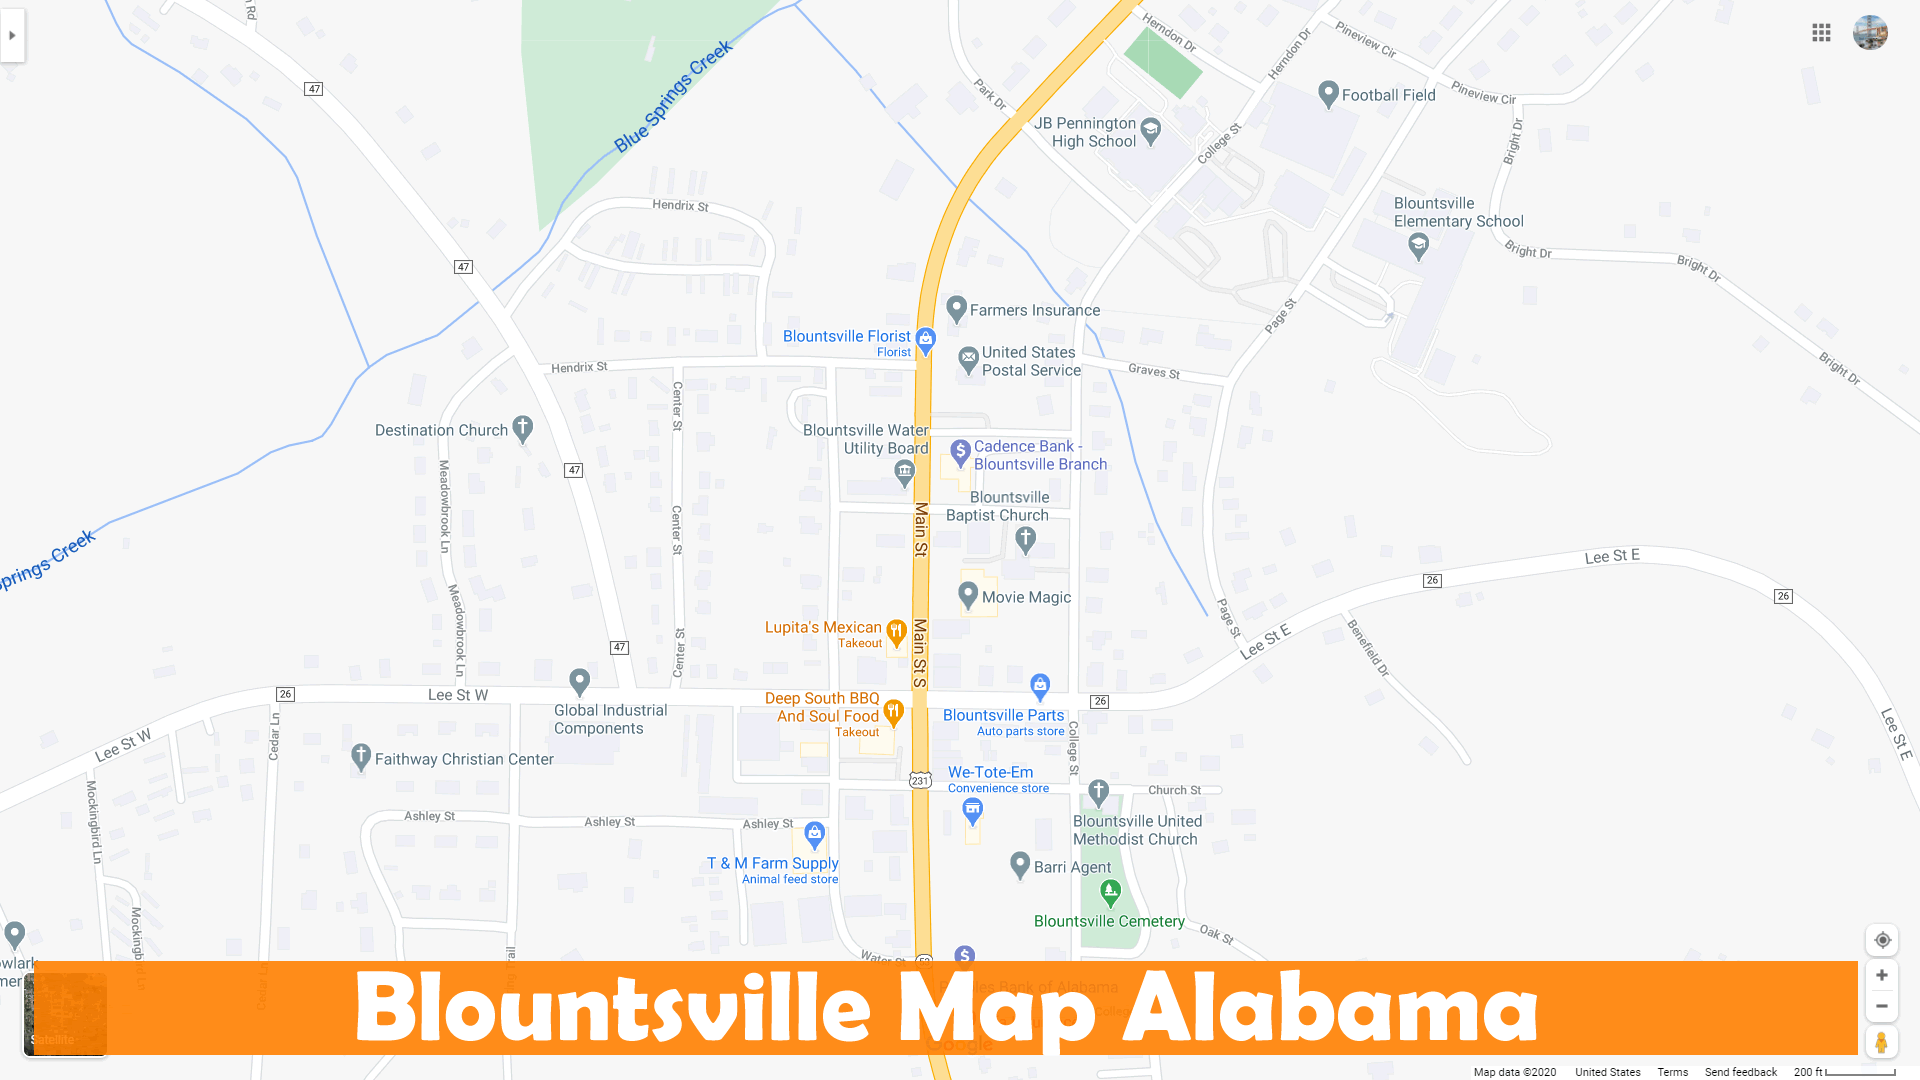 Blountsville Alabama Map